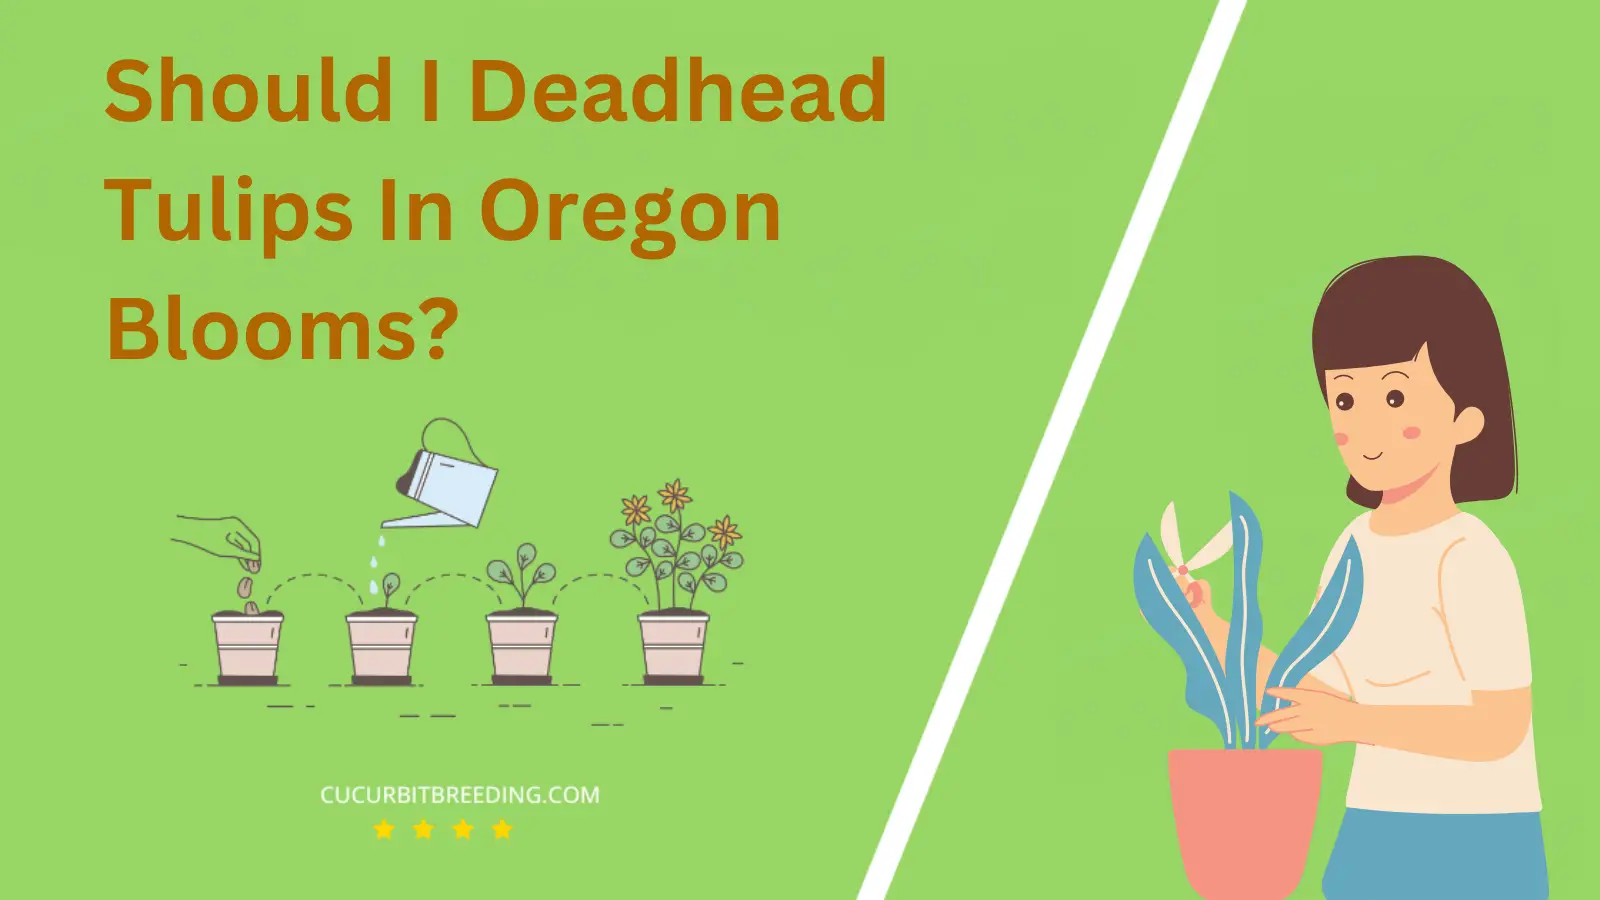 Should I Deadhead Tulips In Oregon Blooms?